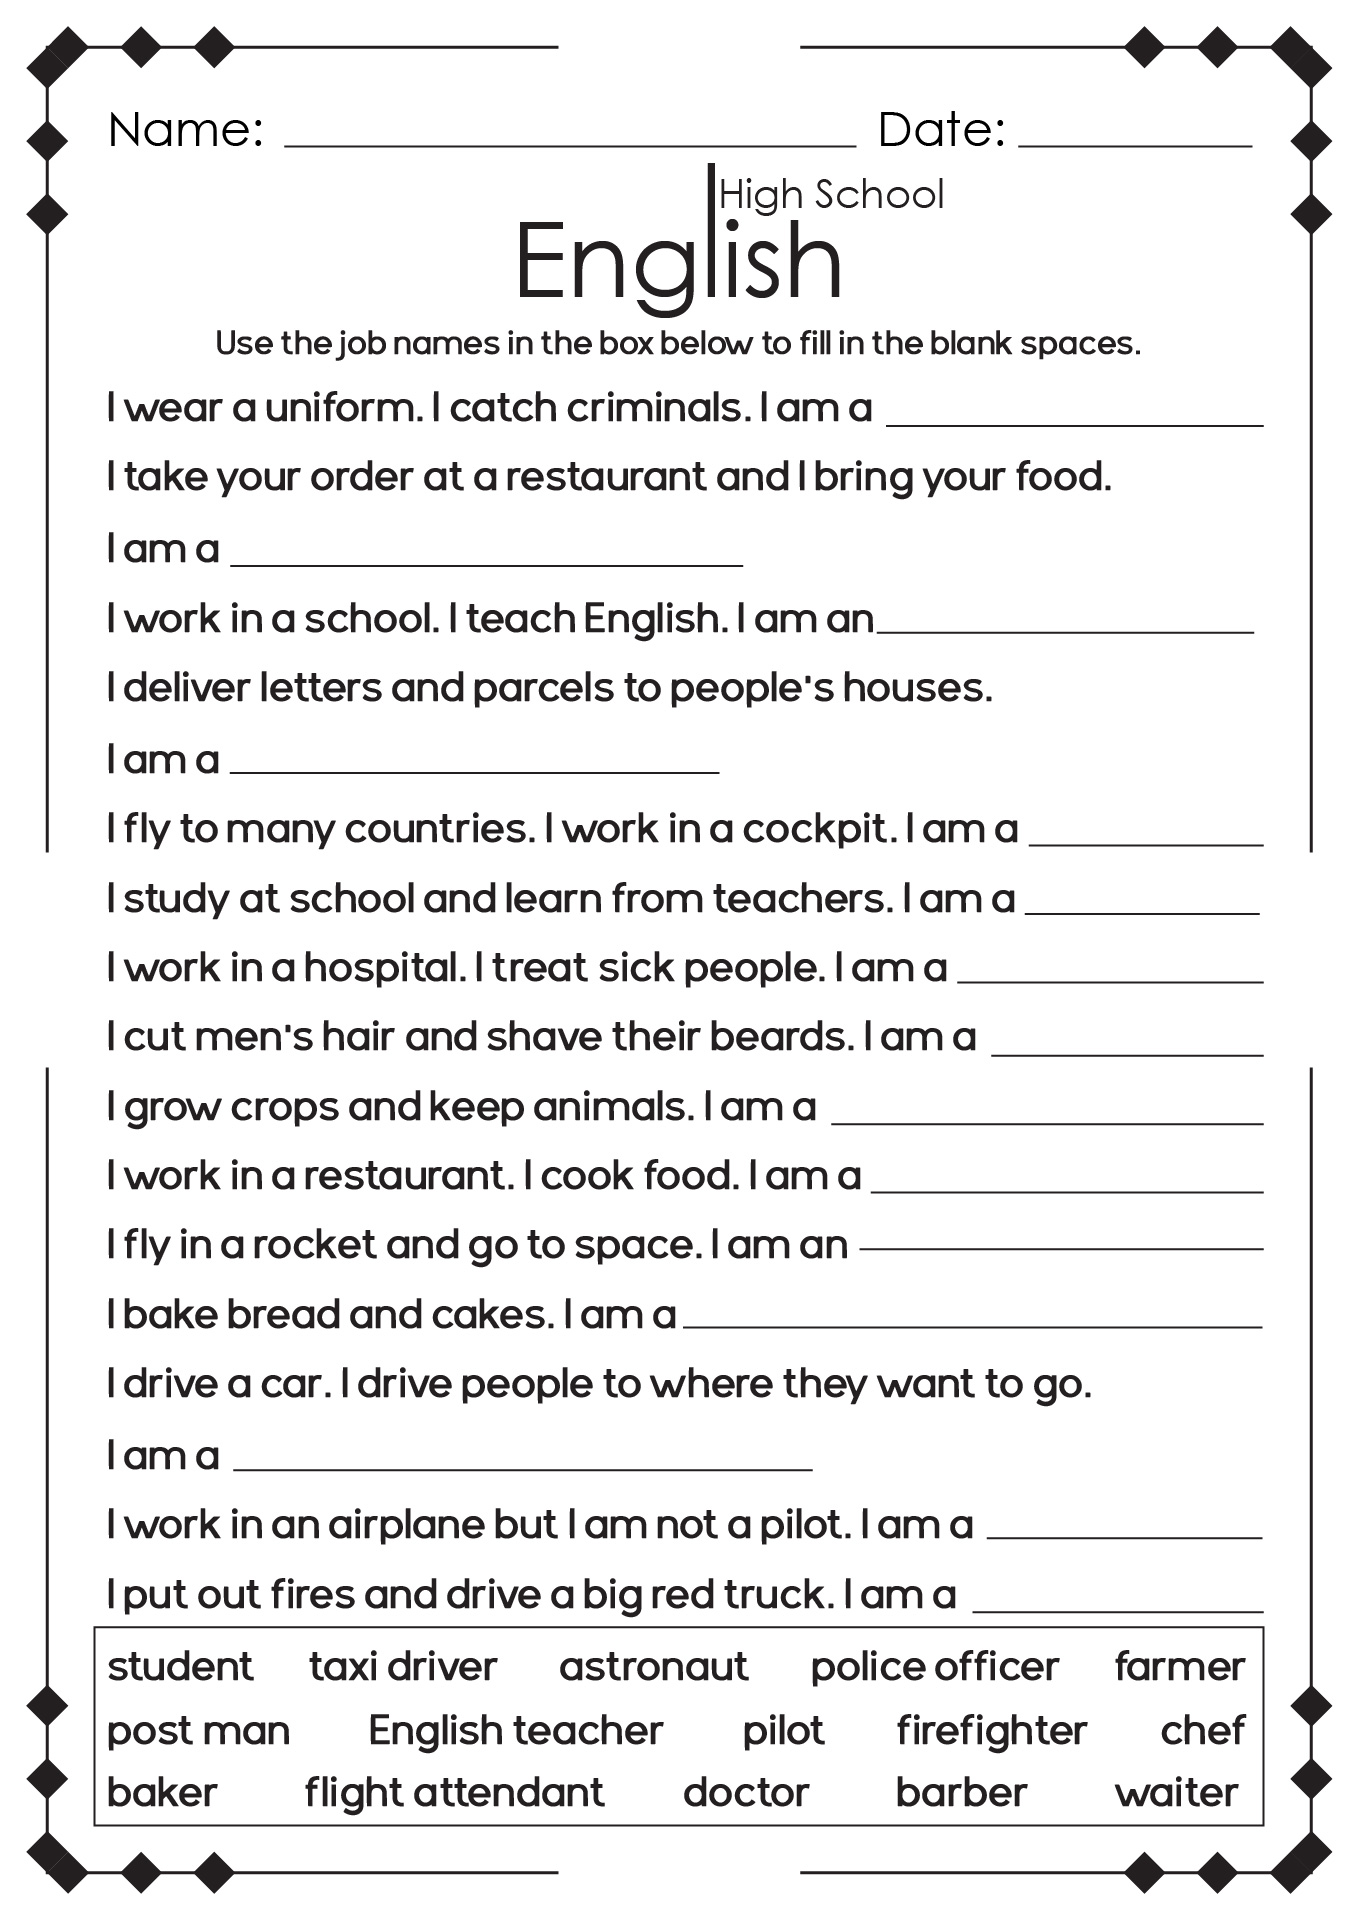 High School English Worksheets Image